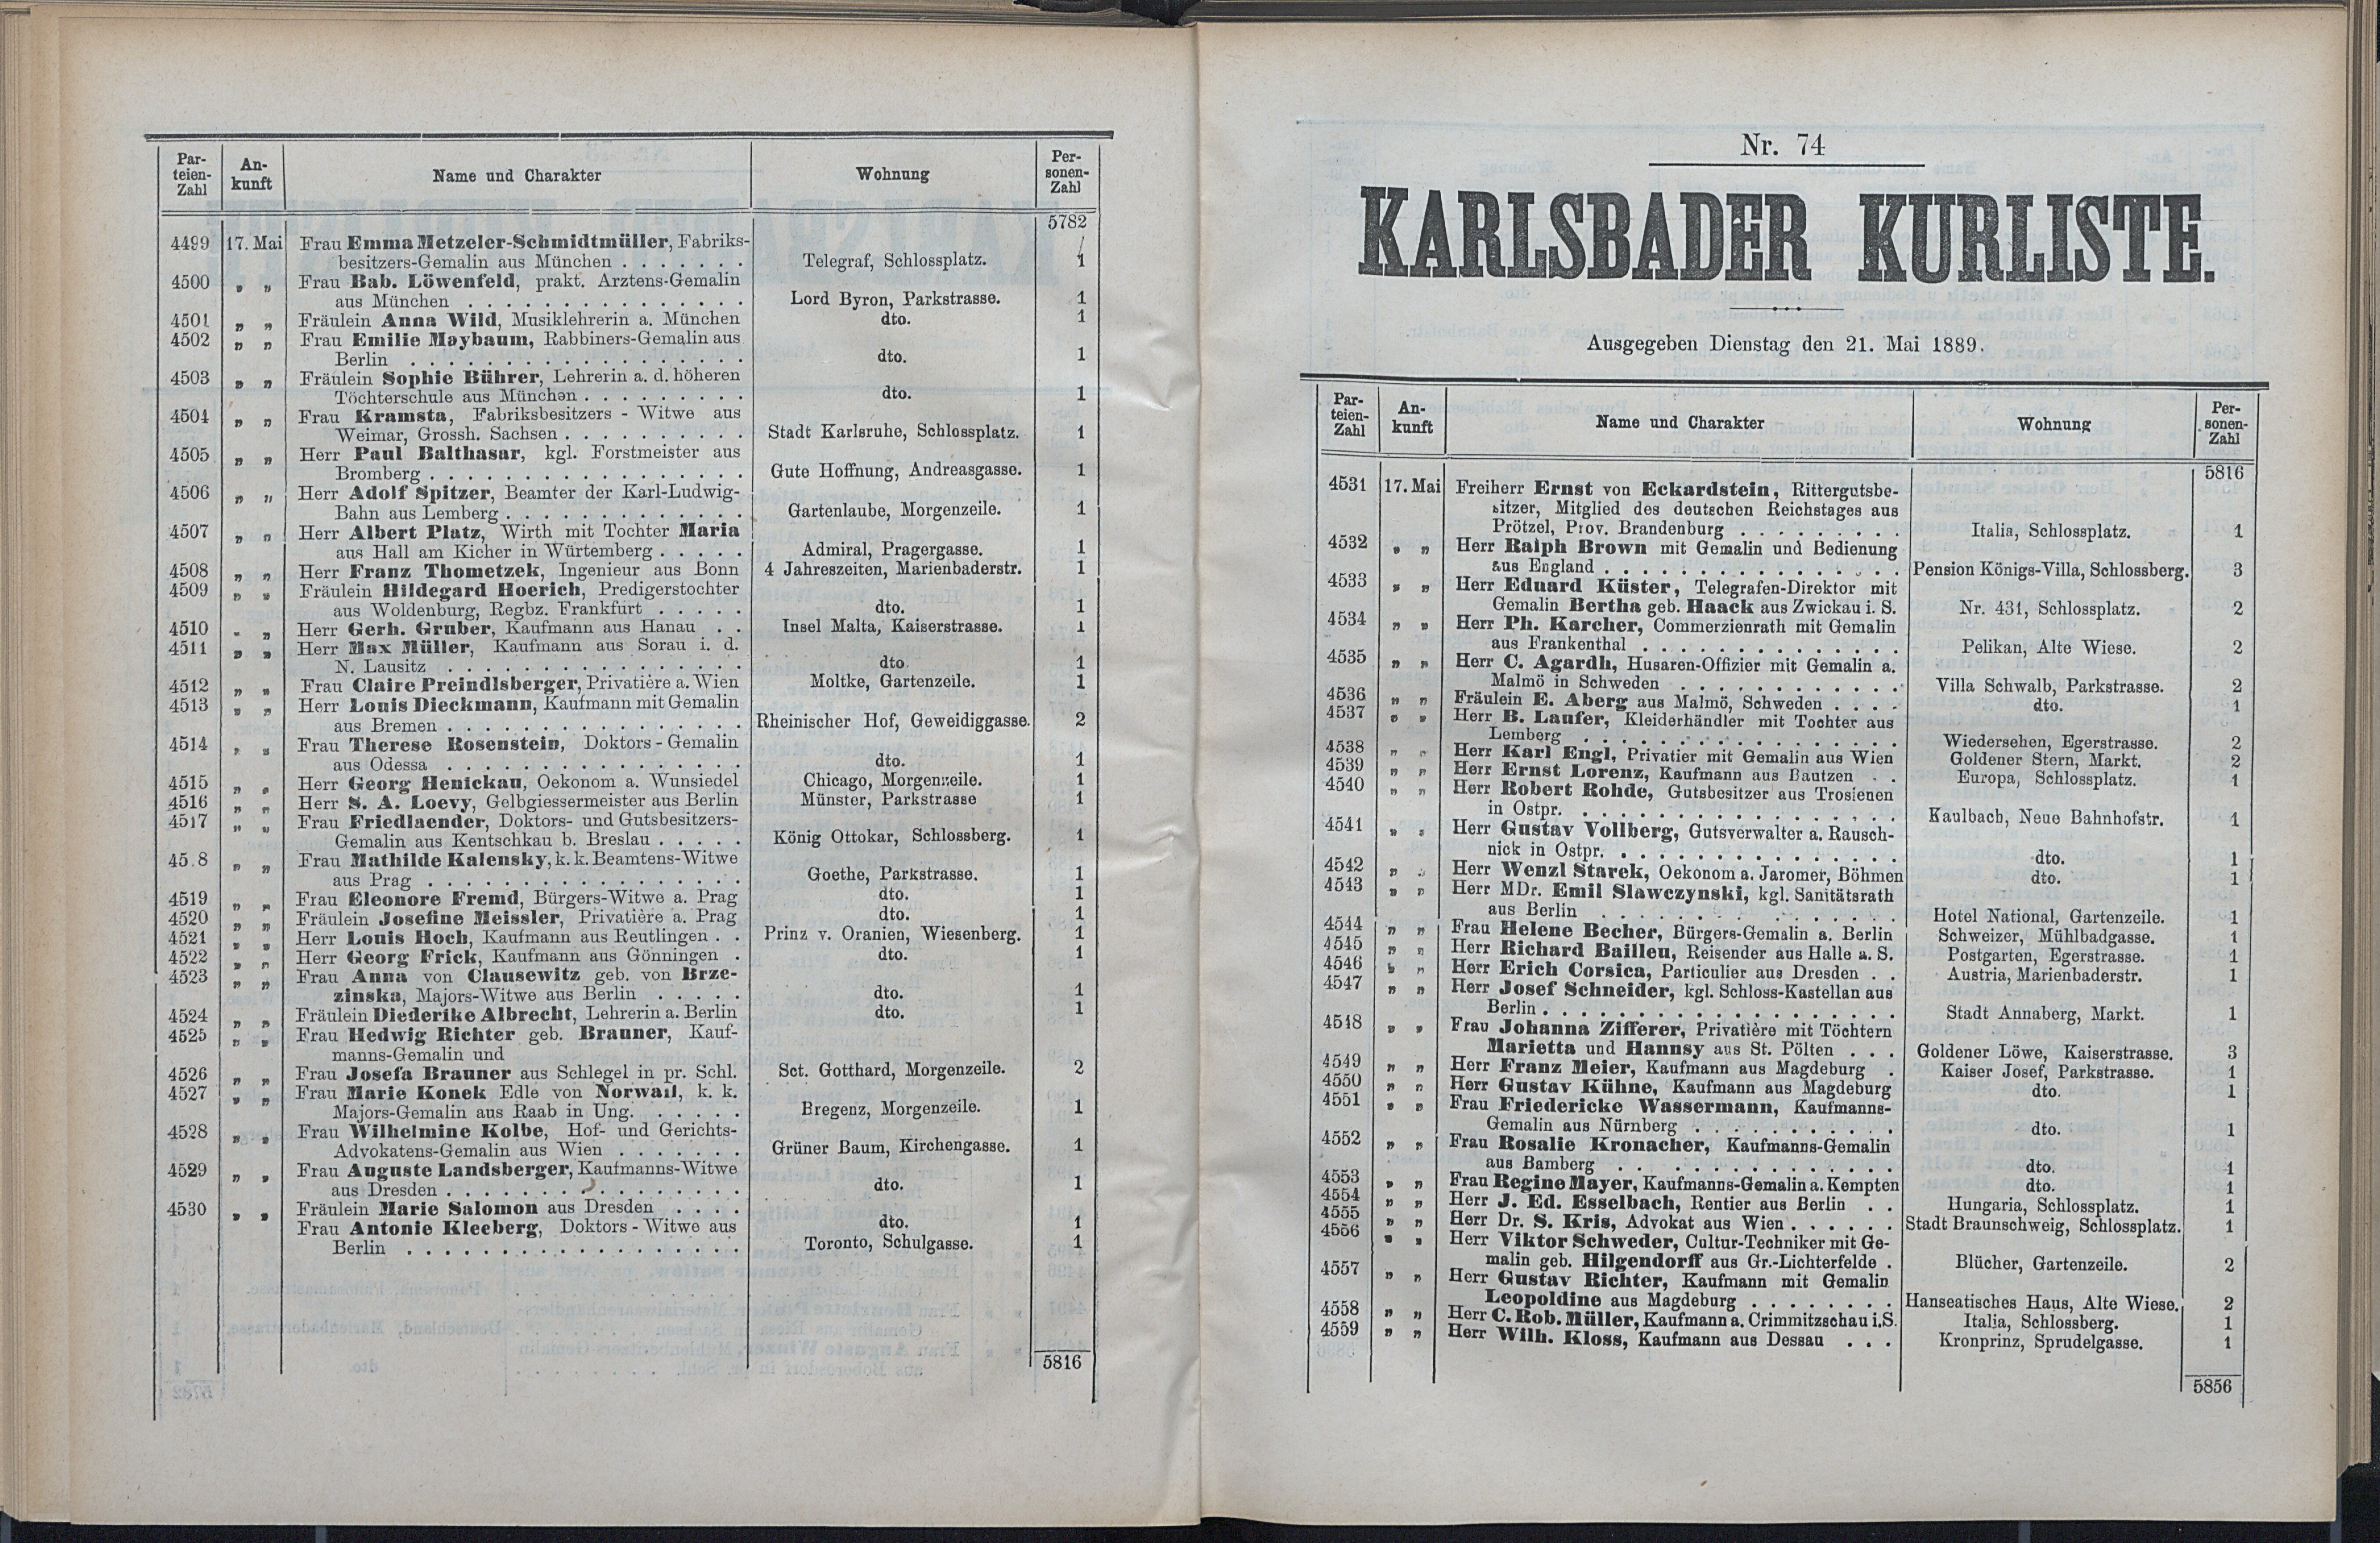 135. soap-kv_knihovna_karlsbader-kurliste-1889_1360